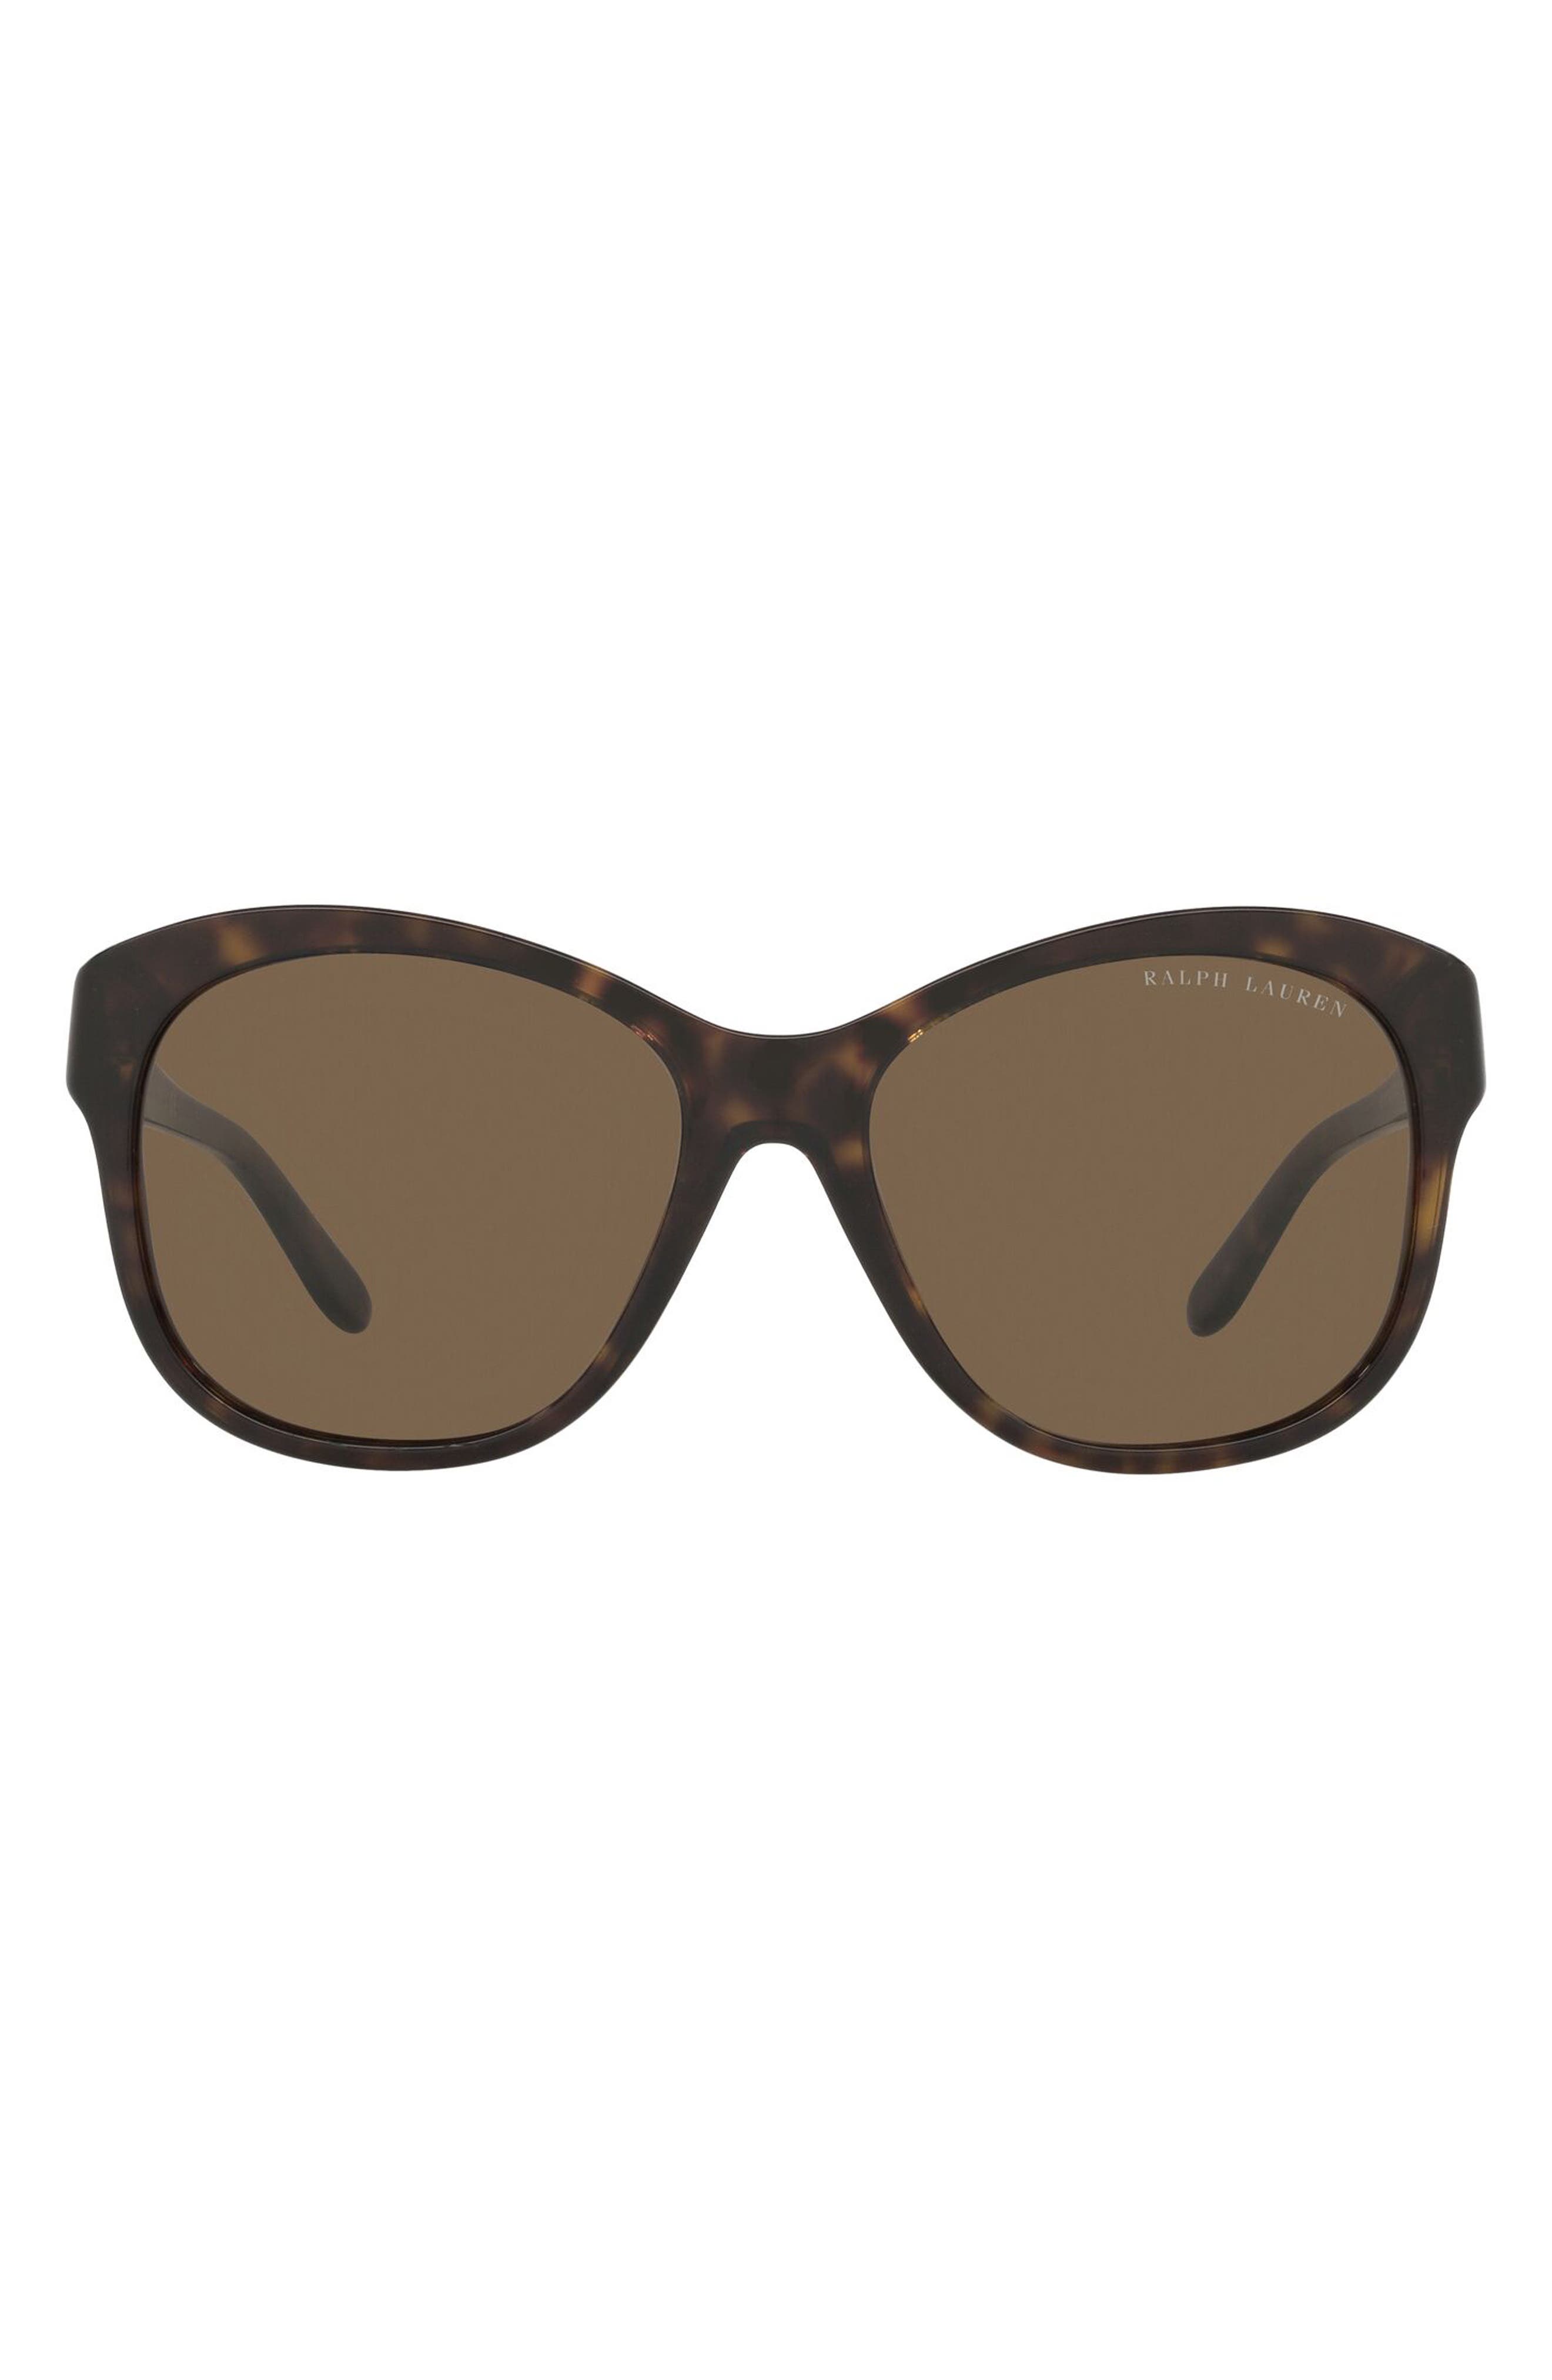 Ralph Lauren 55mm Square Sunglasses in Shiny Dark Havana/brown at Nordstrom